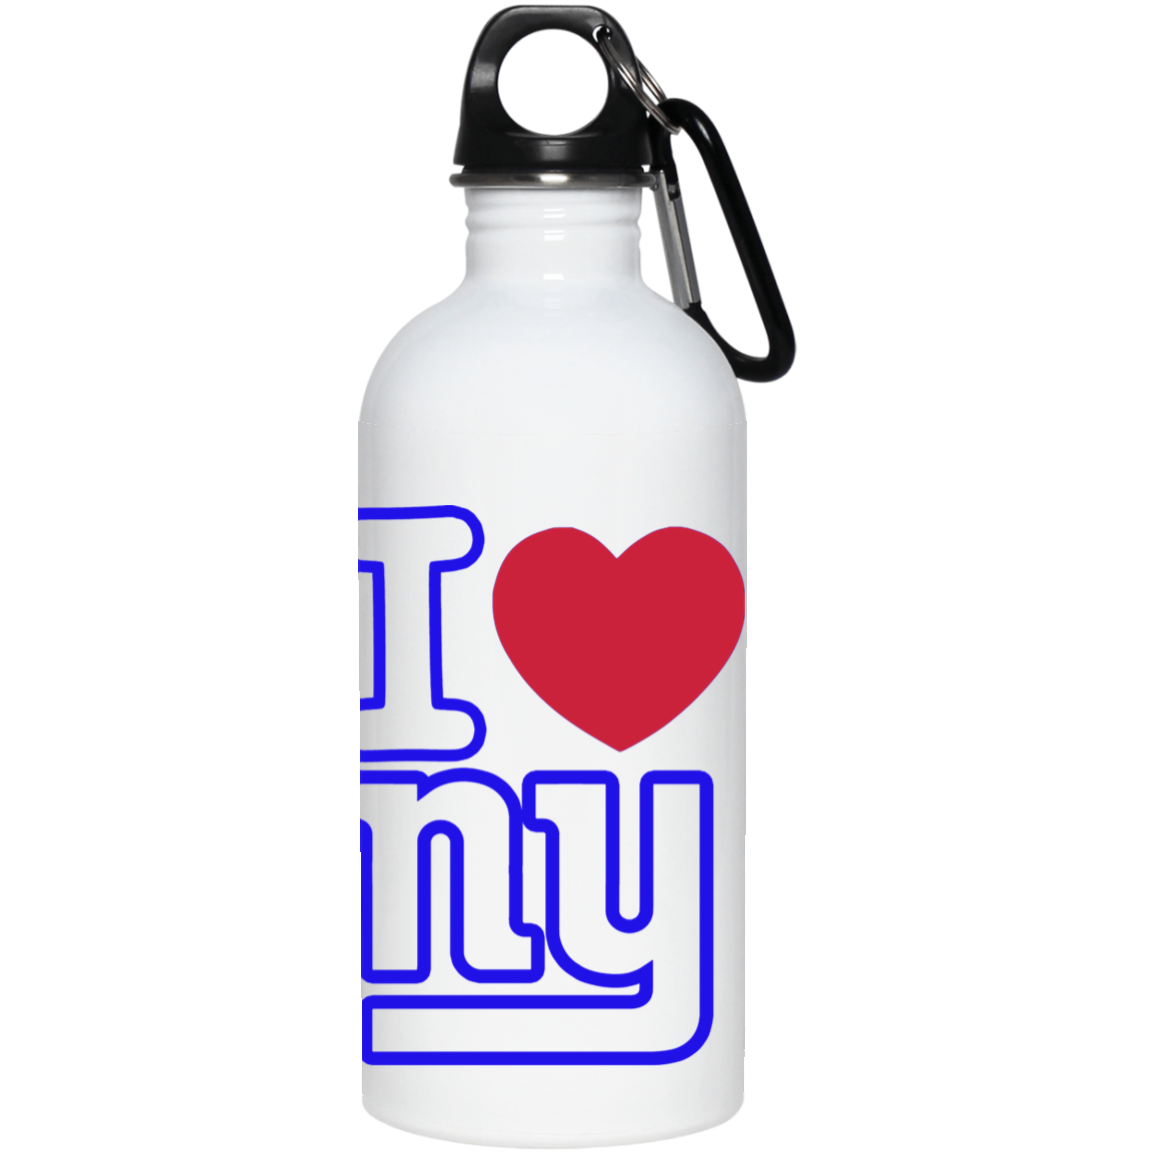 ArtichokeUSA Custom Design. I heart New York Giants. NY Giants Football Fan Art. 20 oz. Stainless Steel Water Bottle